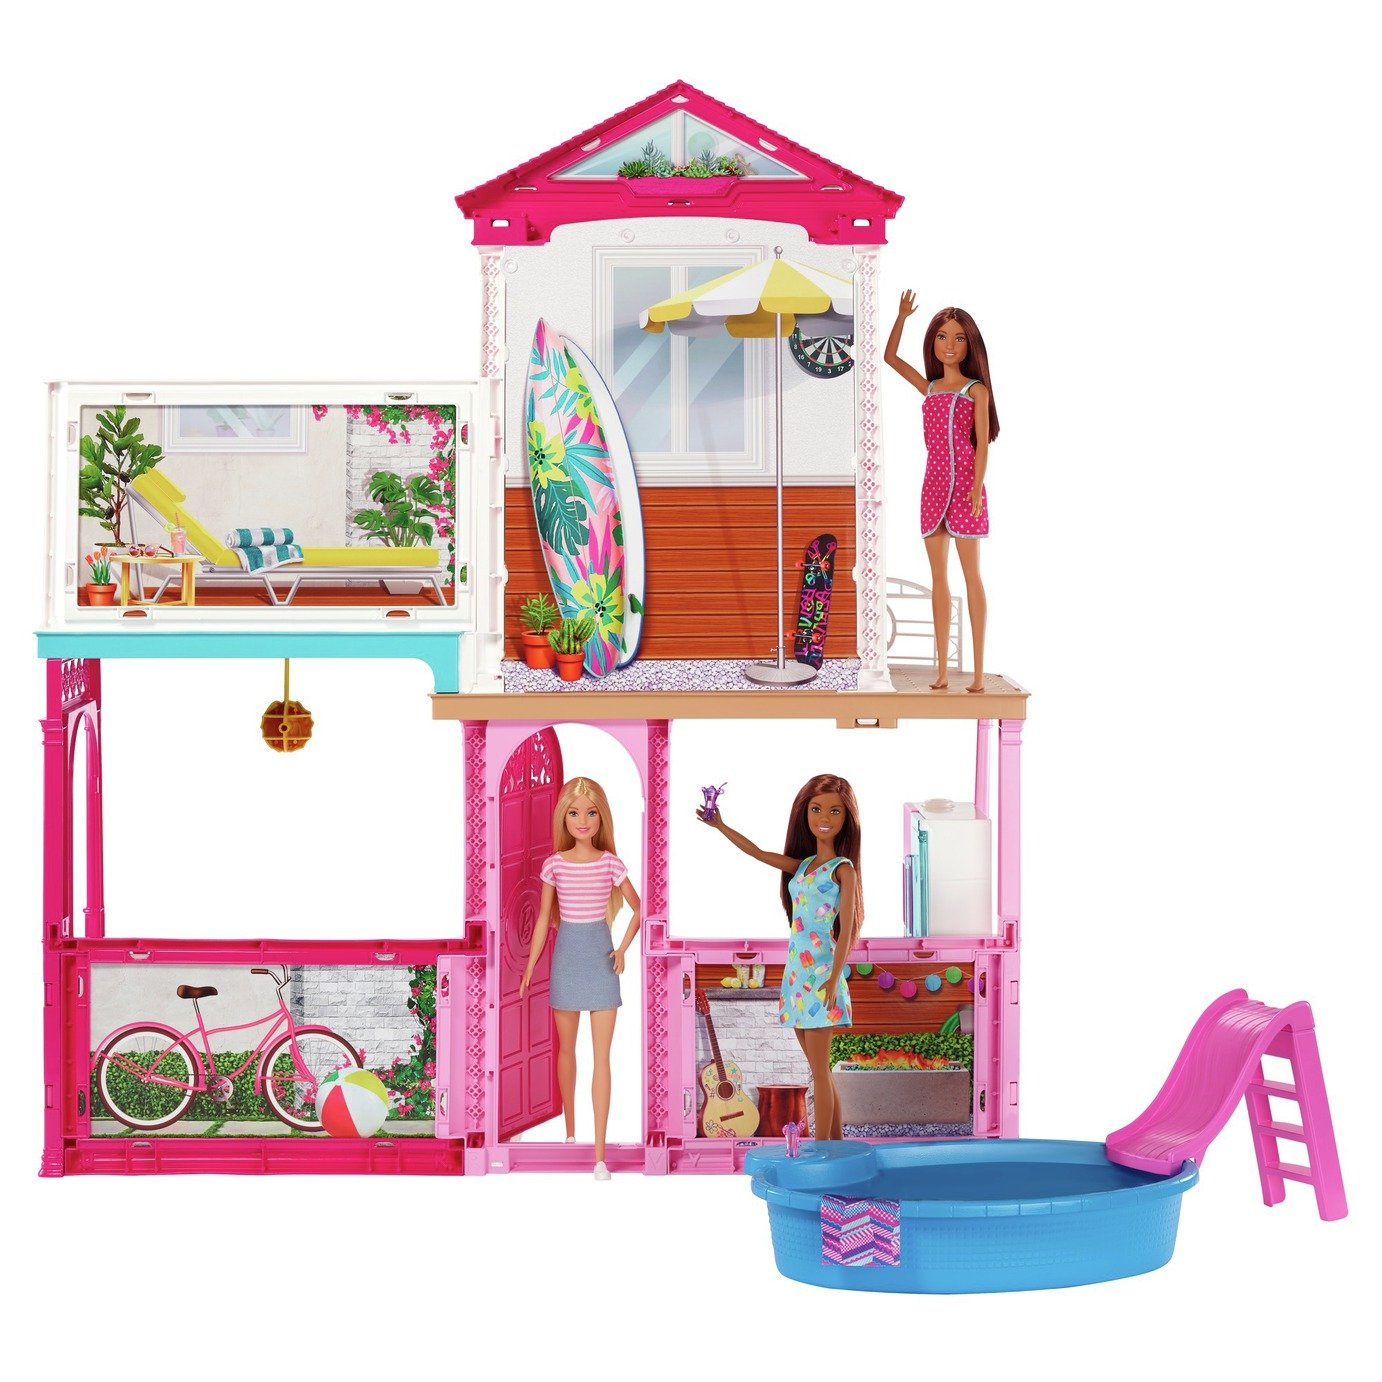 Barbie Estate Dolls House Review